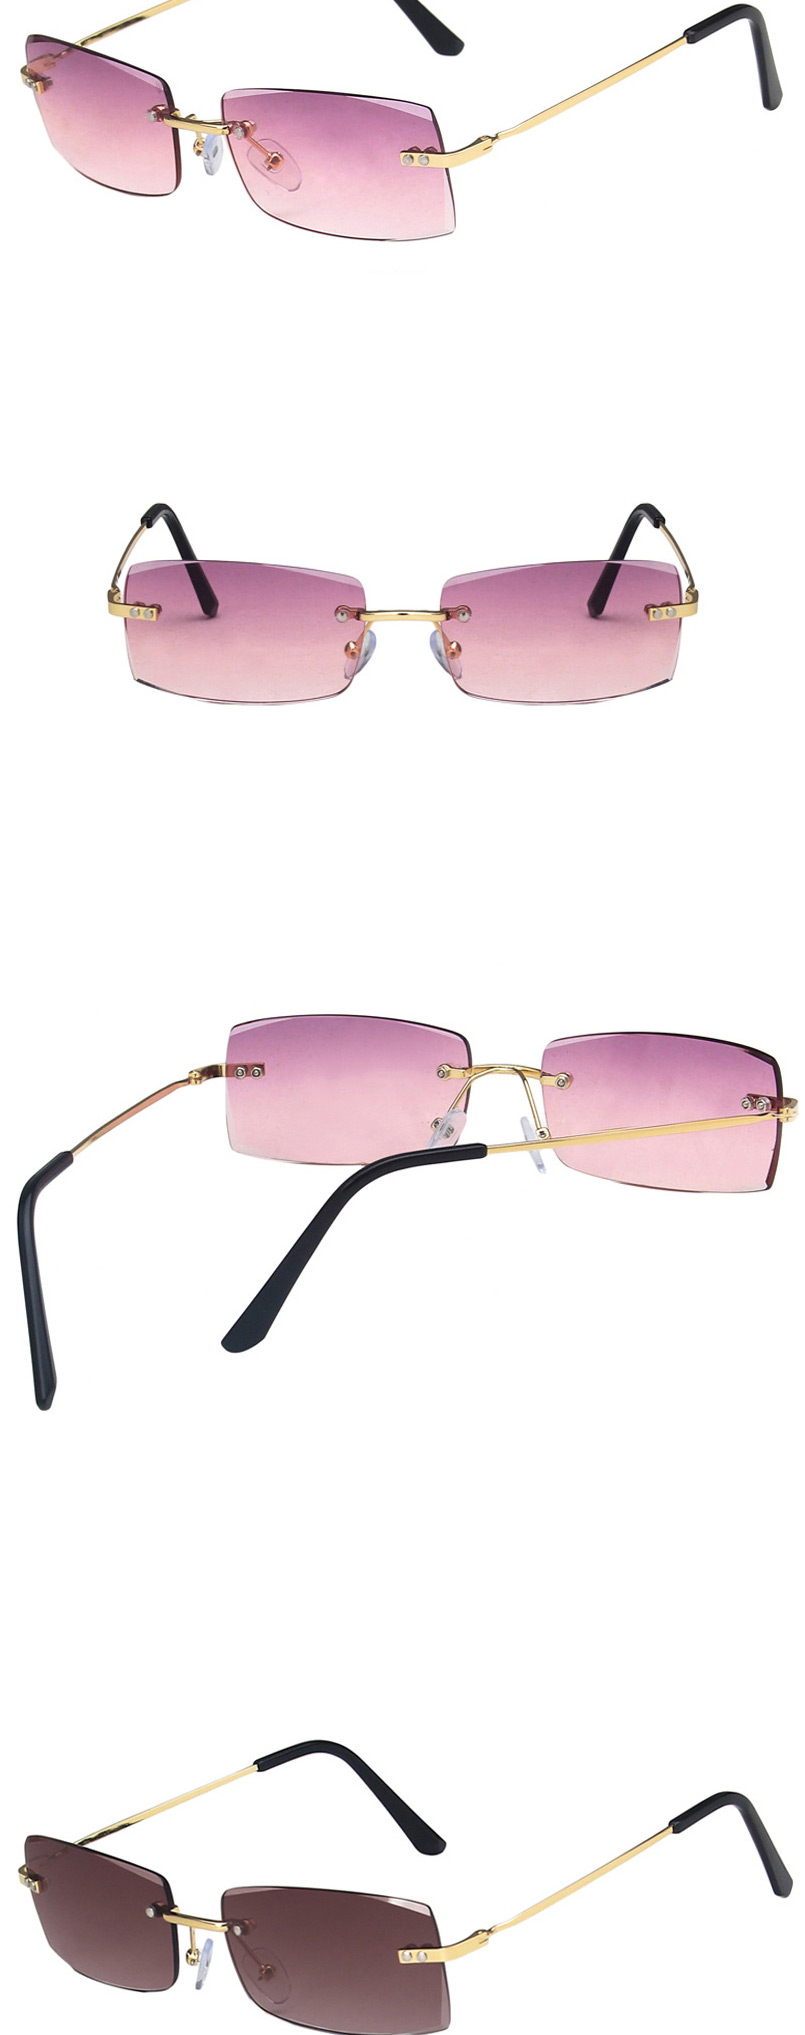 Fashion Double Powder Trimmed Rimless Small Frame Sunglasses,Women Sunglasses